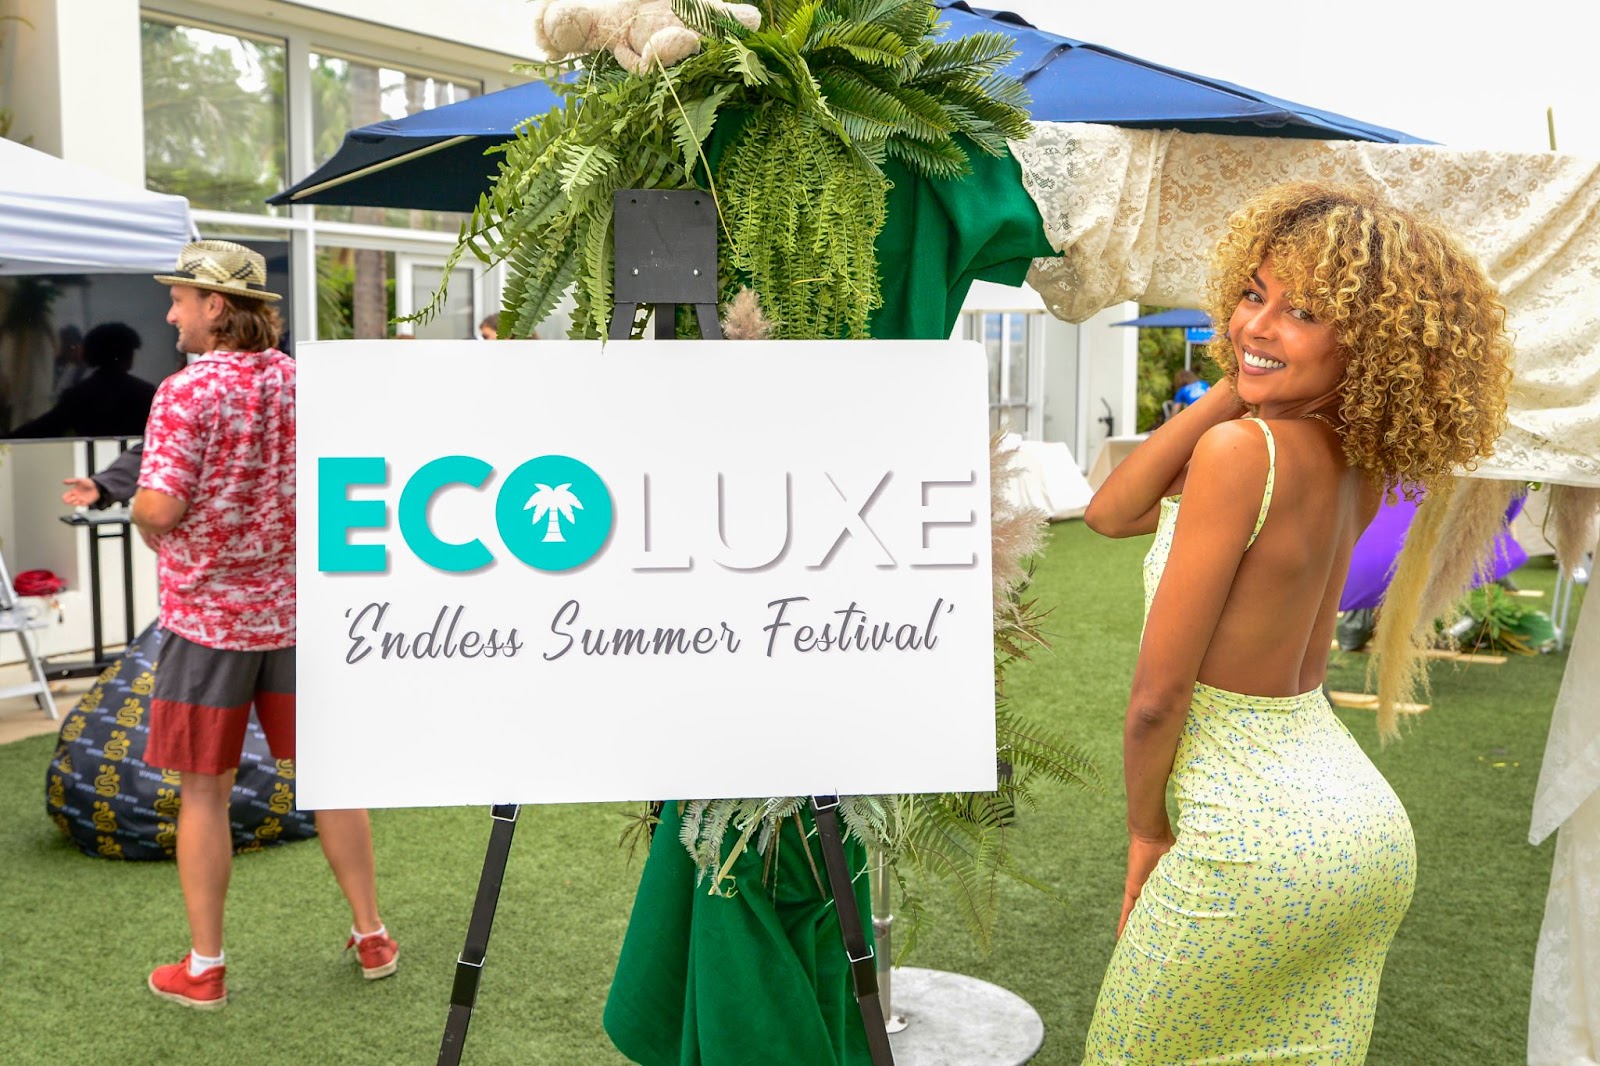 Debbie Durkin presented “Ecoluxe Endless Summer Festival”